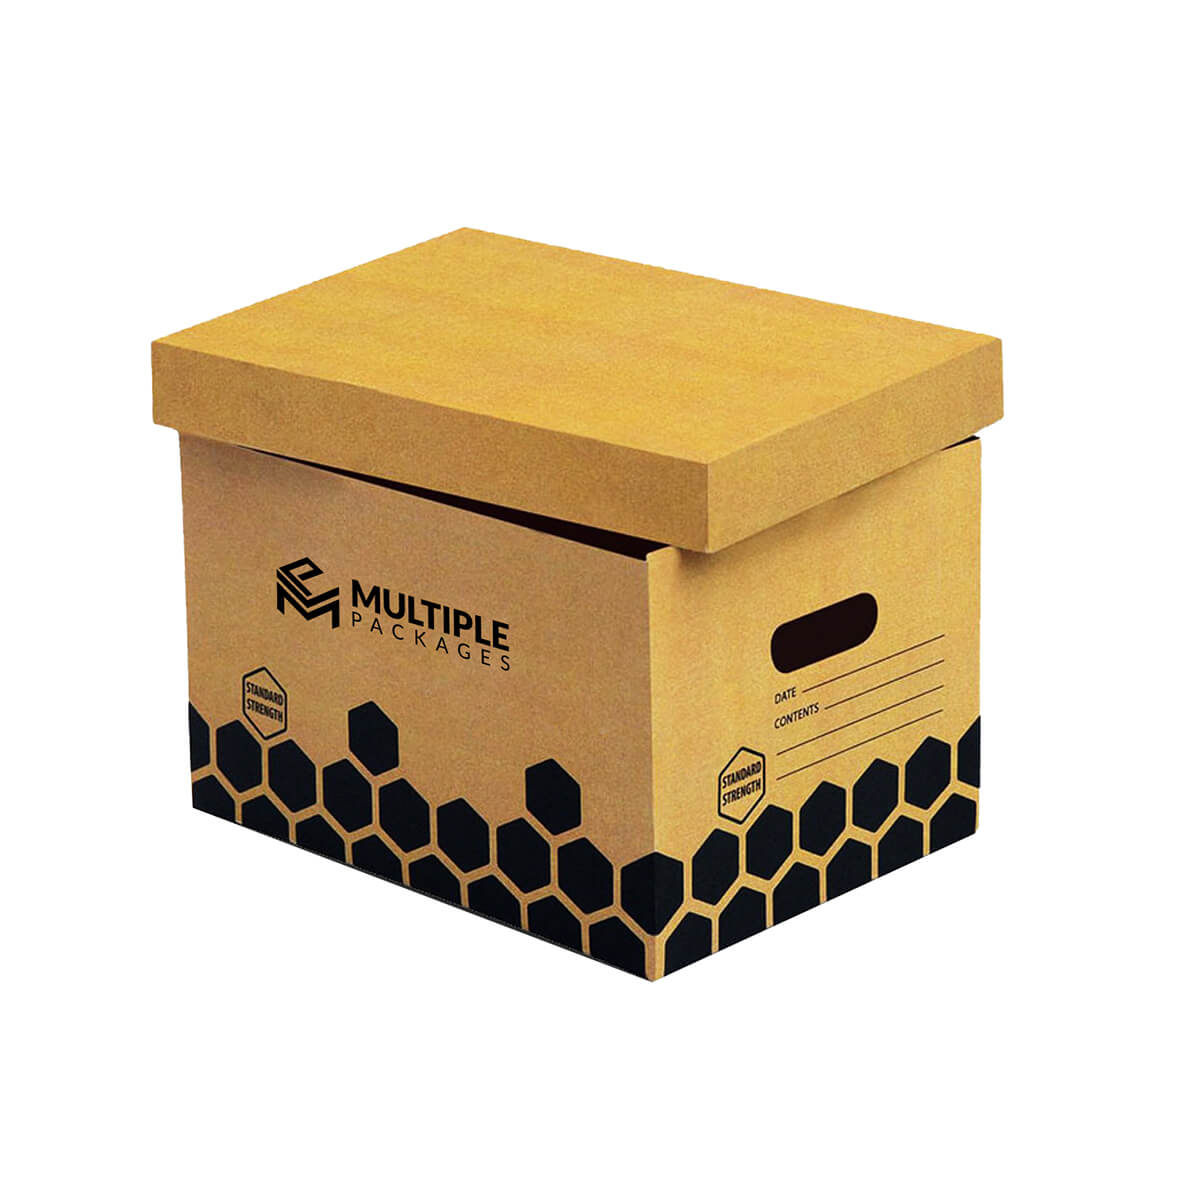 Buy Wholesale China Archive Files Box, Customized Corrugated Boxes